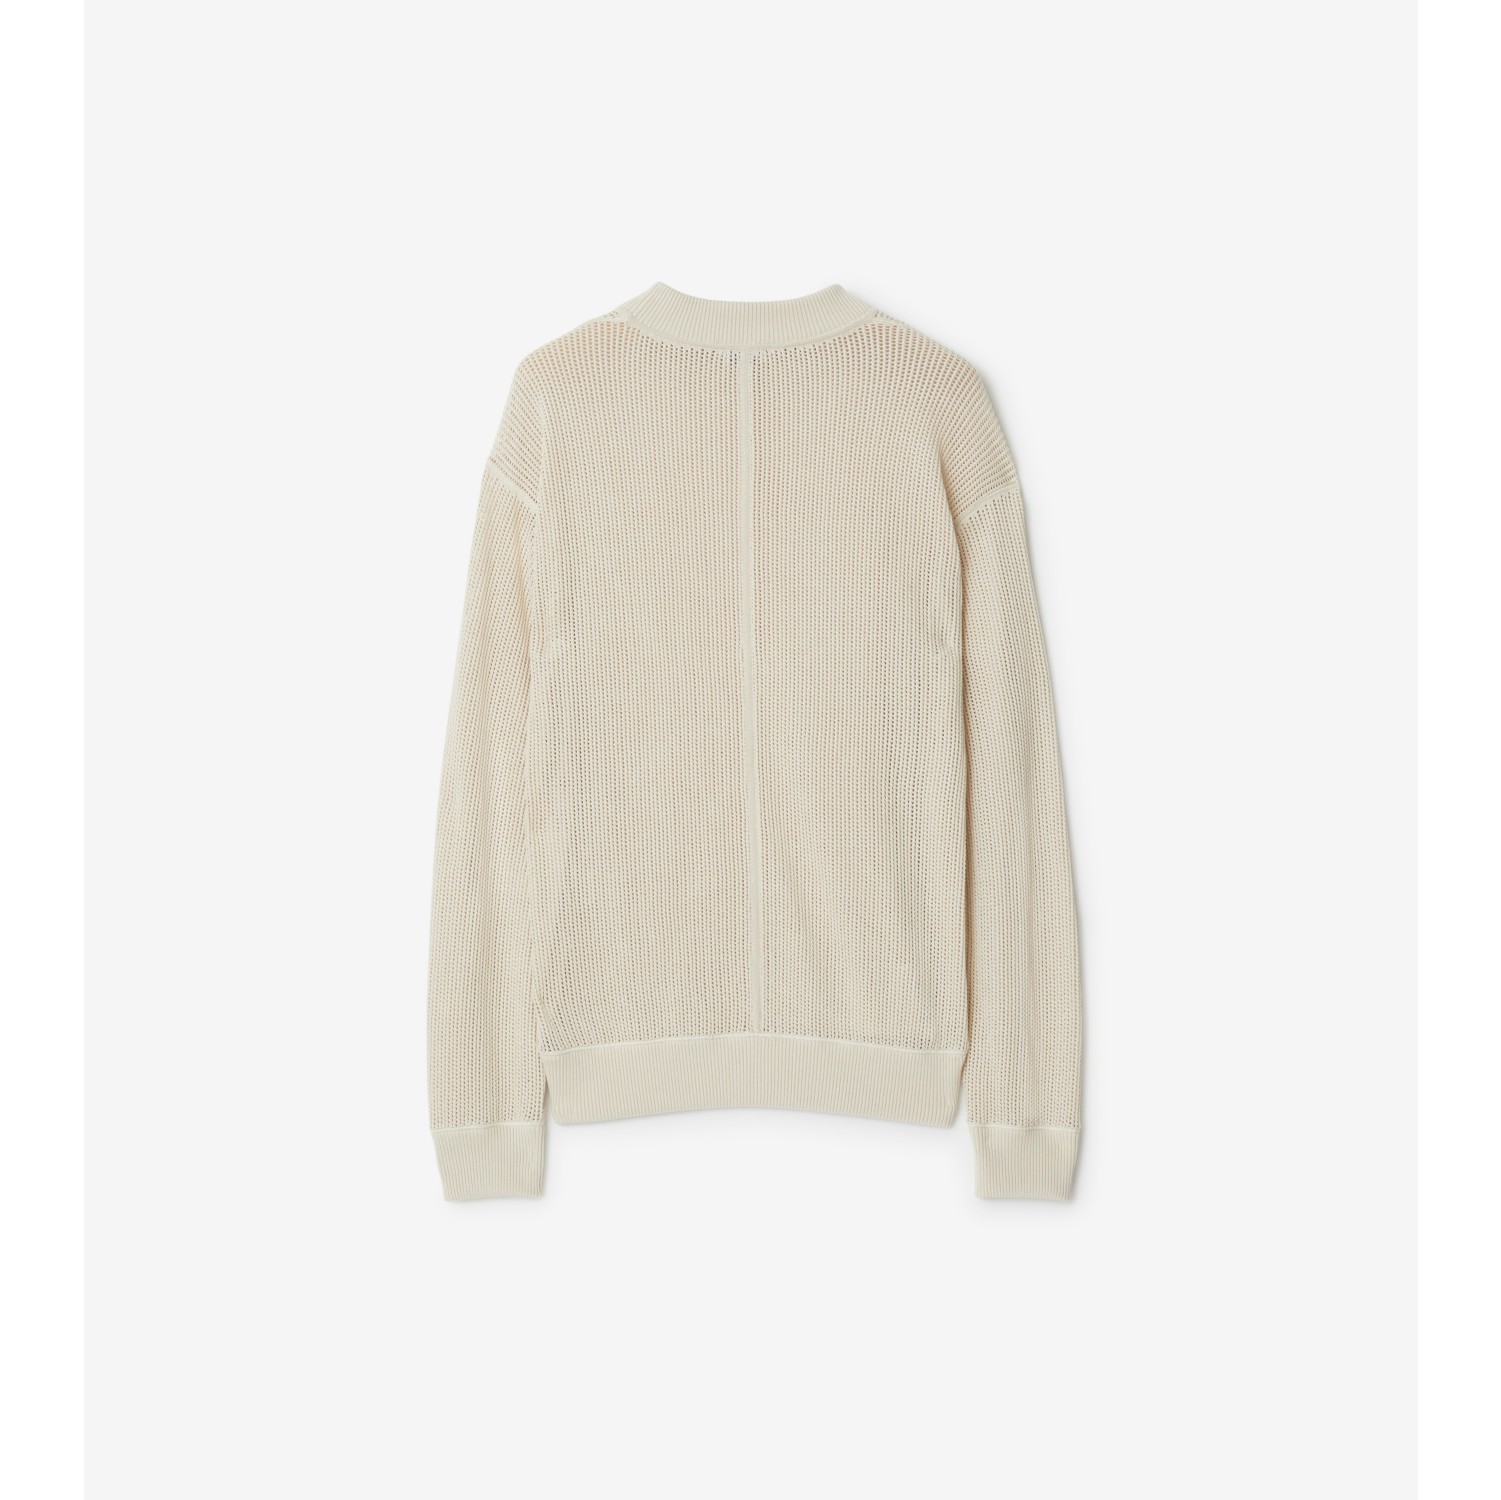 Cotton Mesh Sweater